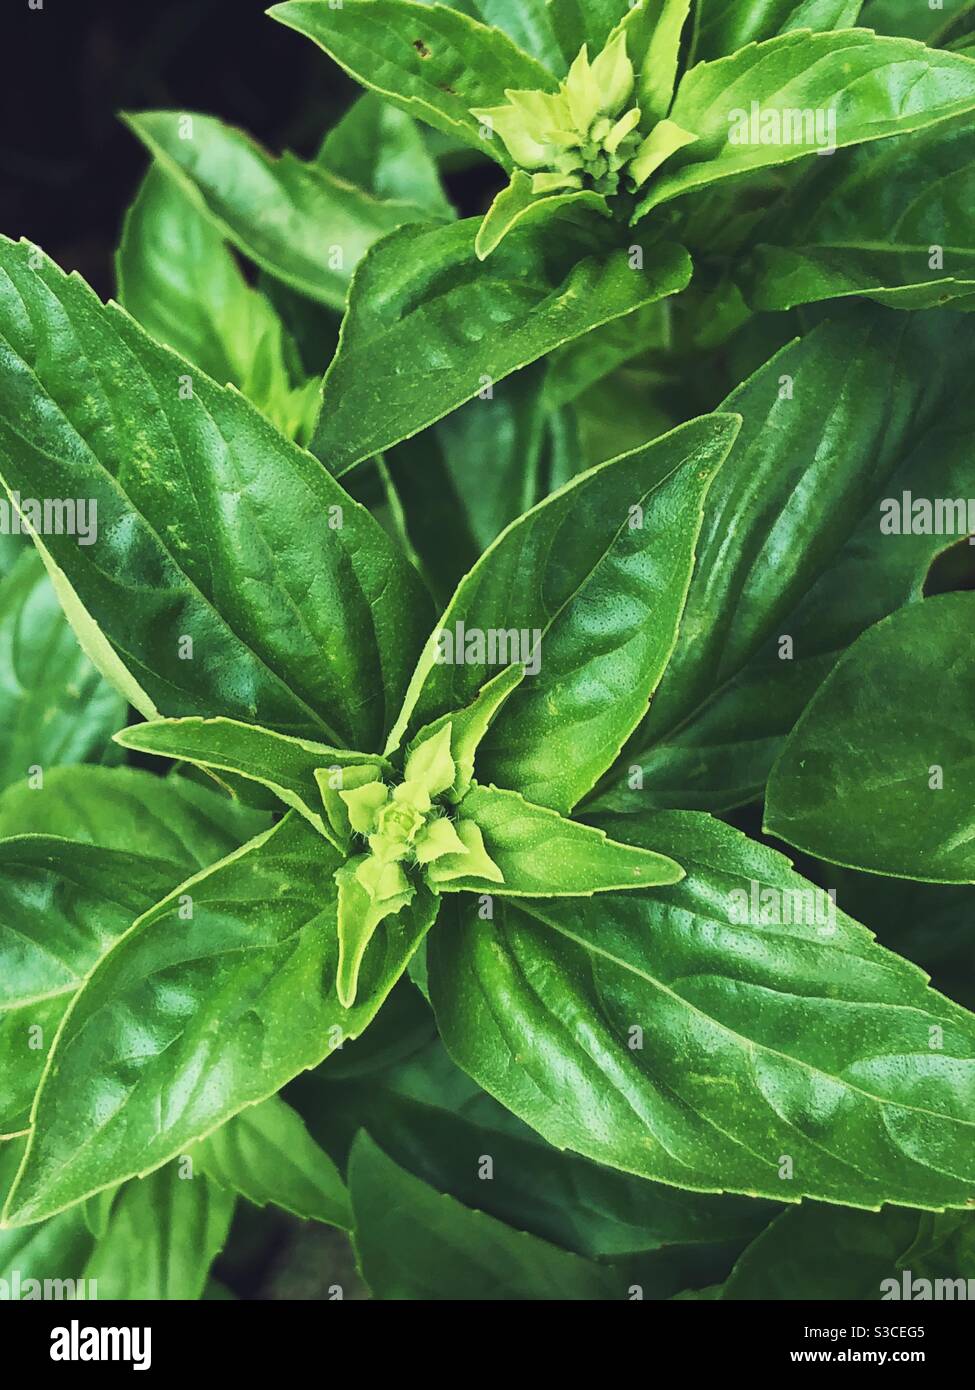 Closeup of basil plant leaves Stock Photo